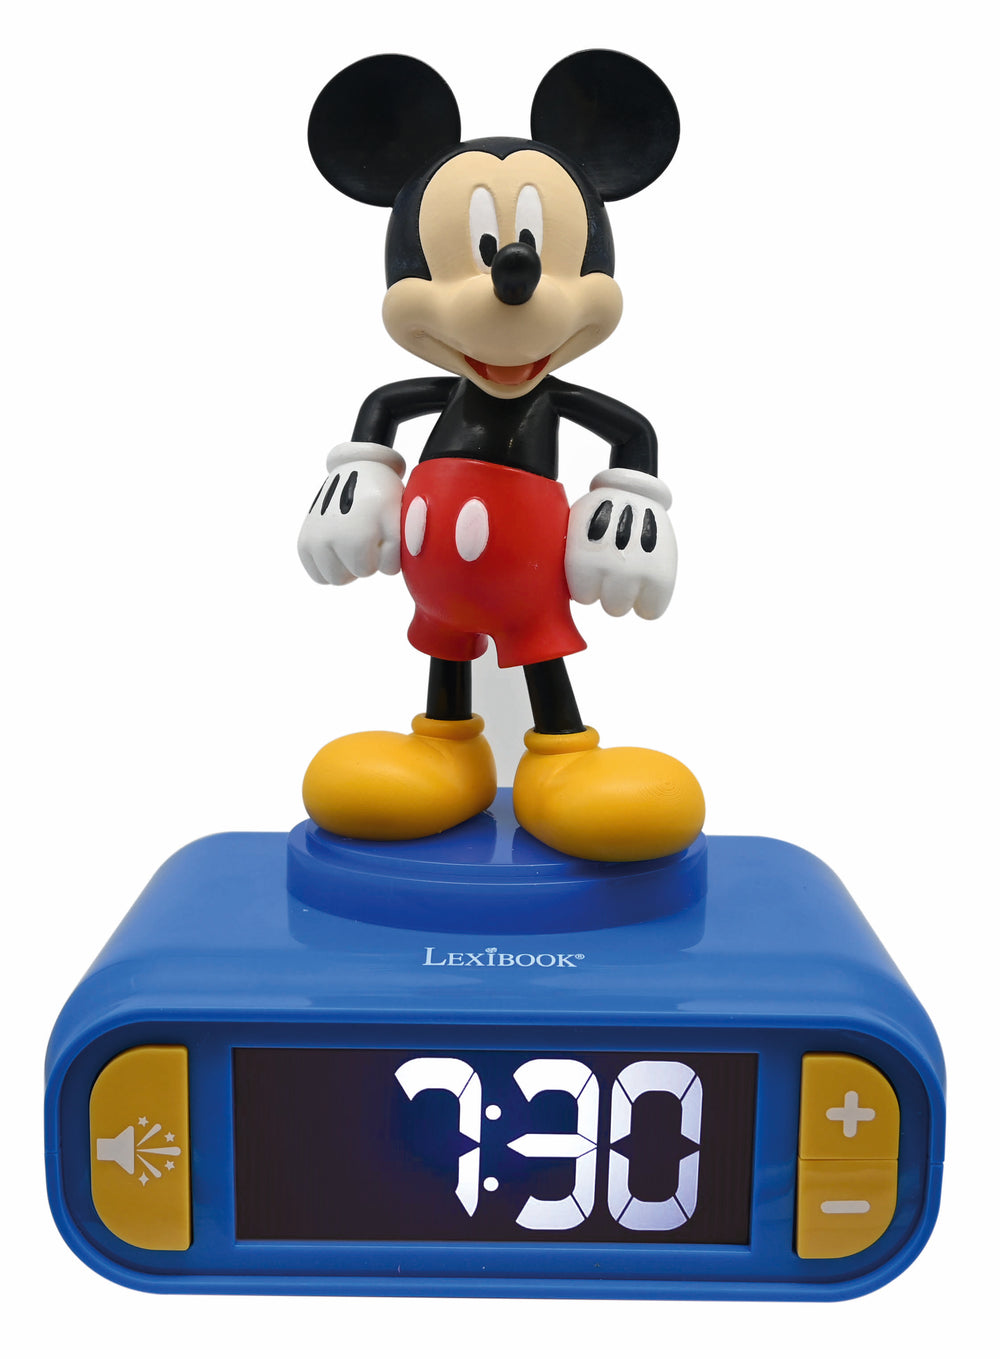 Disney Mickey Mouse Digital Alarm Clock with Nightlight - Interactive Bedtime Companion